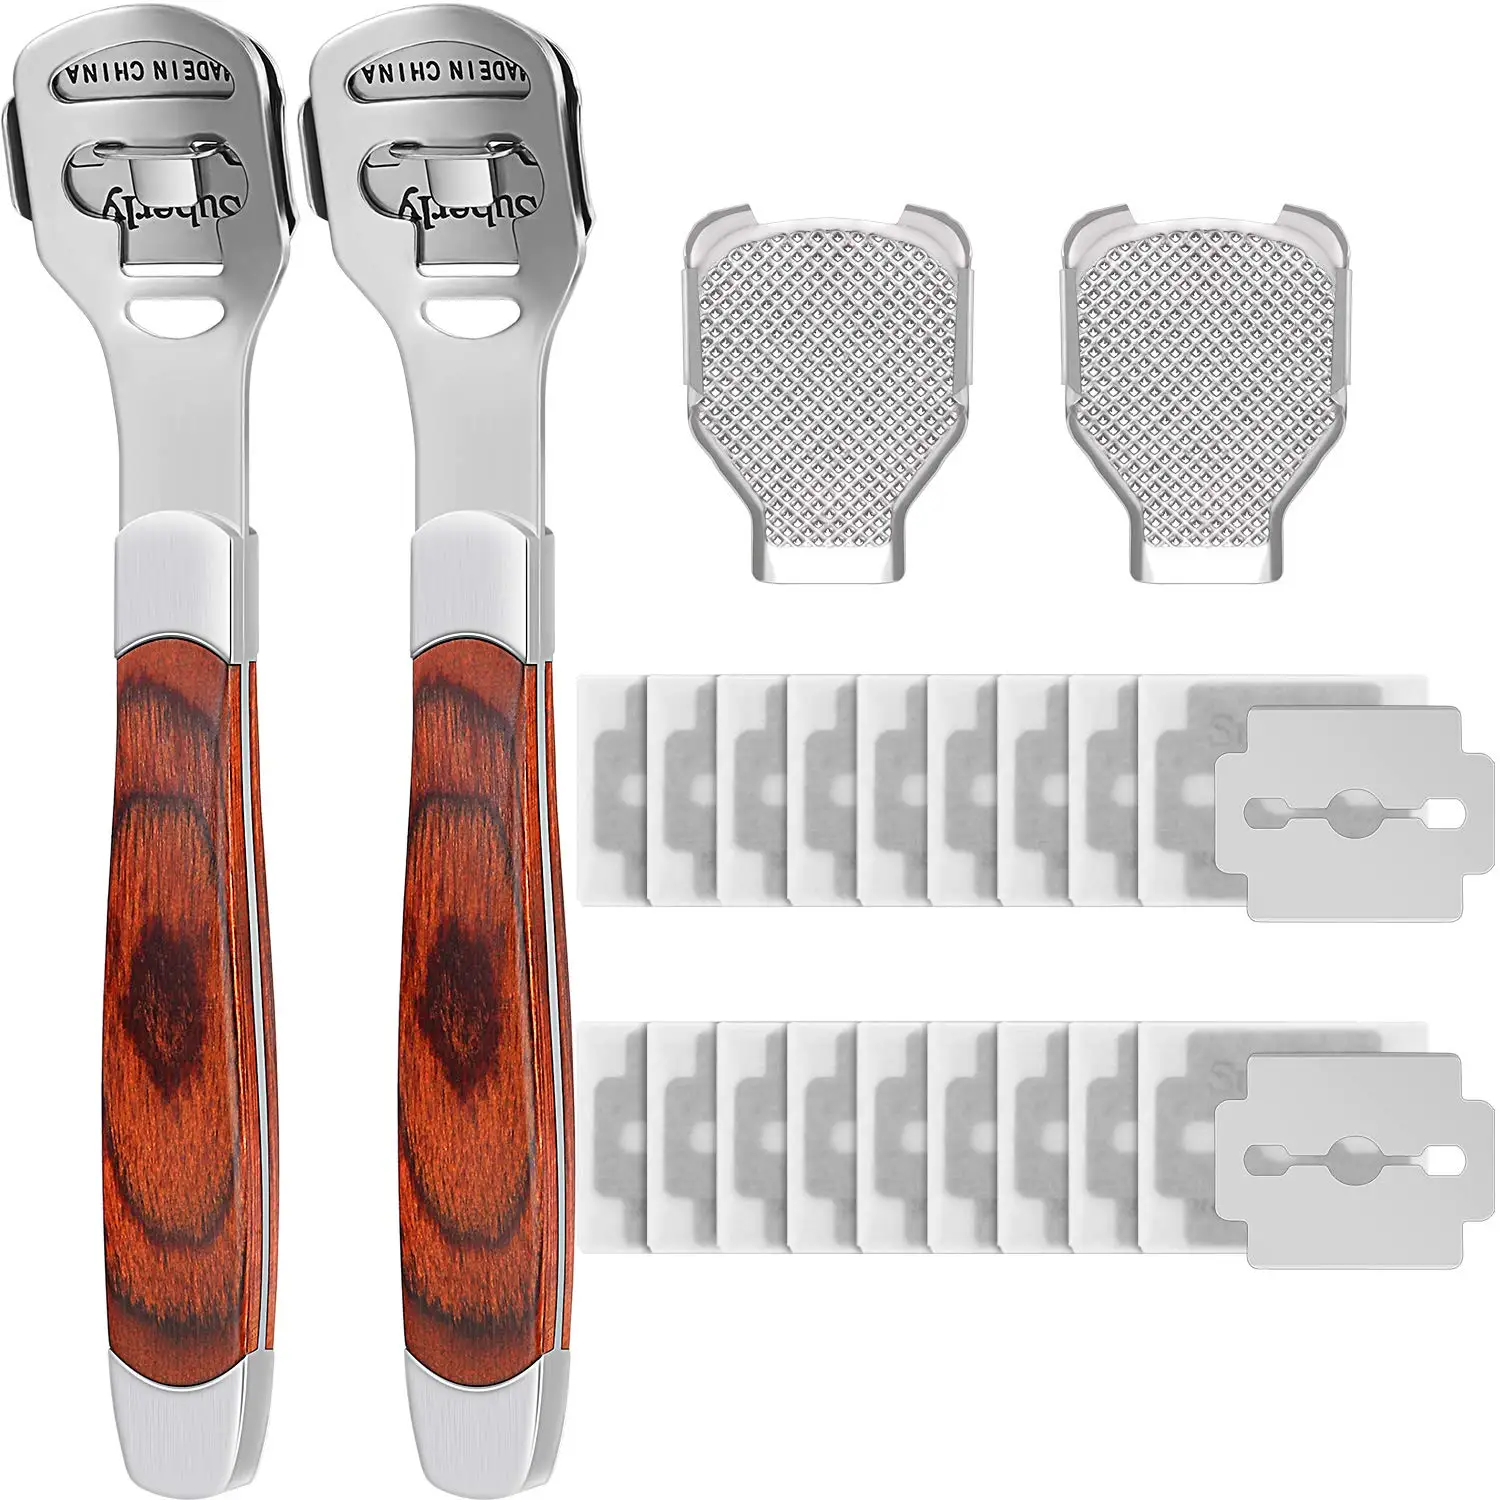 

NEW Peach wood Foot Skin Shaver Corn Cuticle Cutter Remover Rasp Pedicure File Foot Callus 10 Blades Foot Care Tool